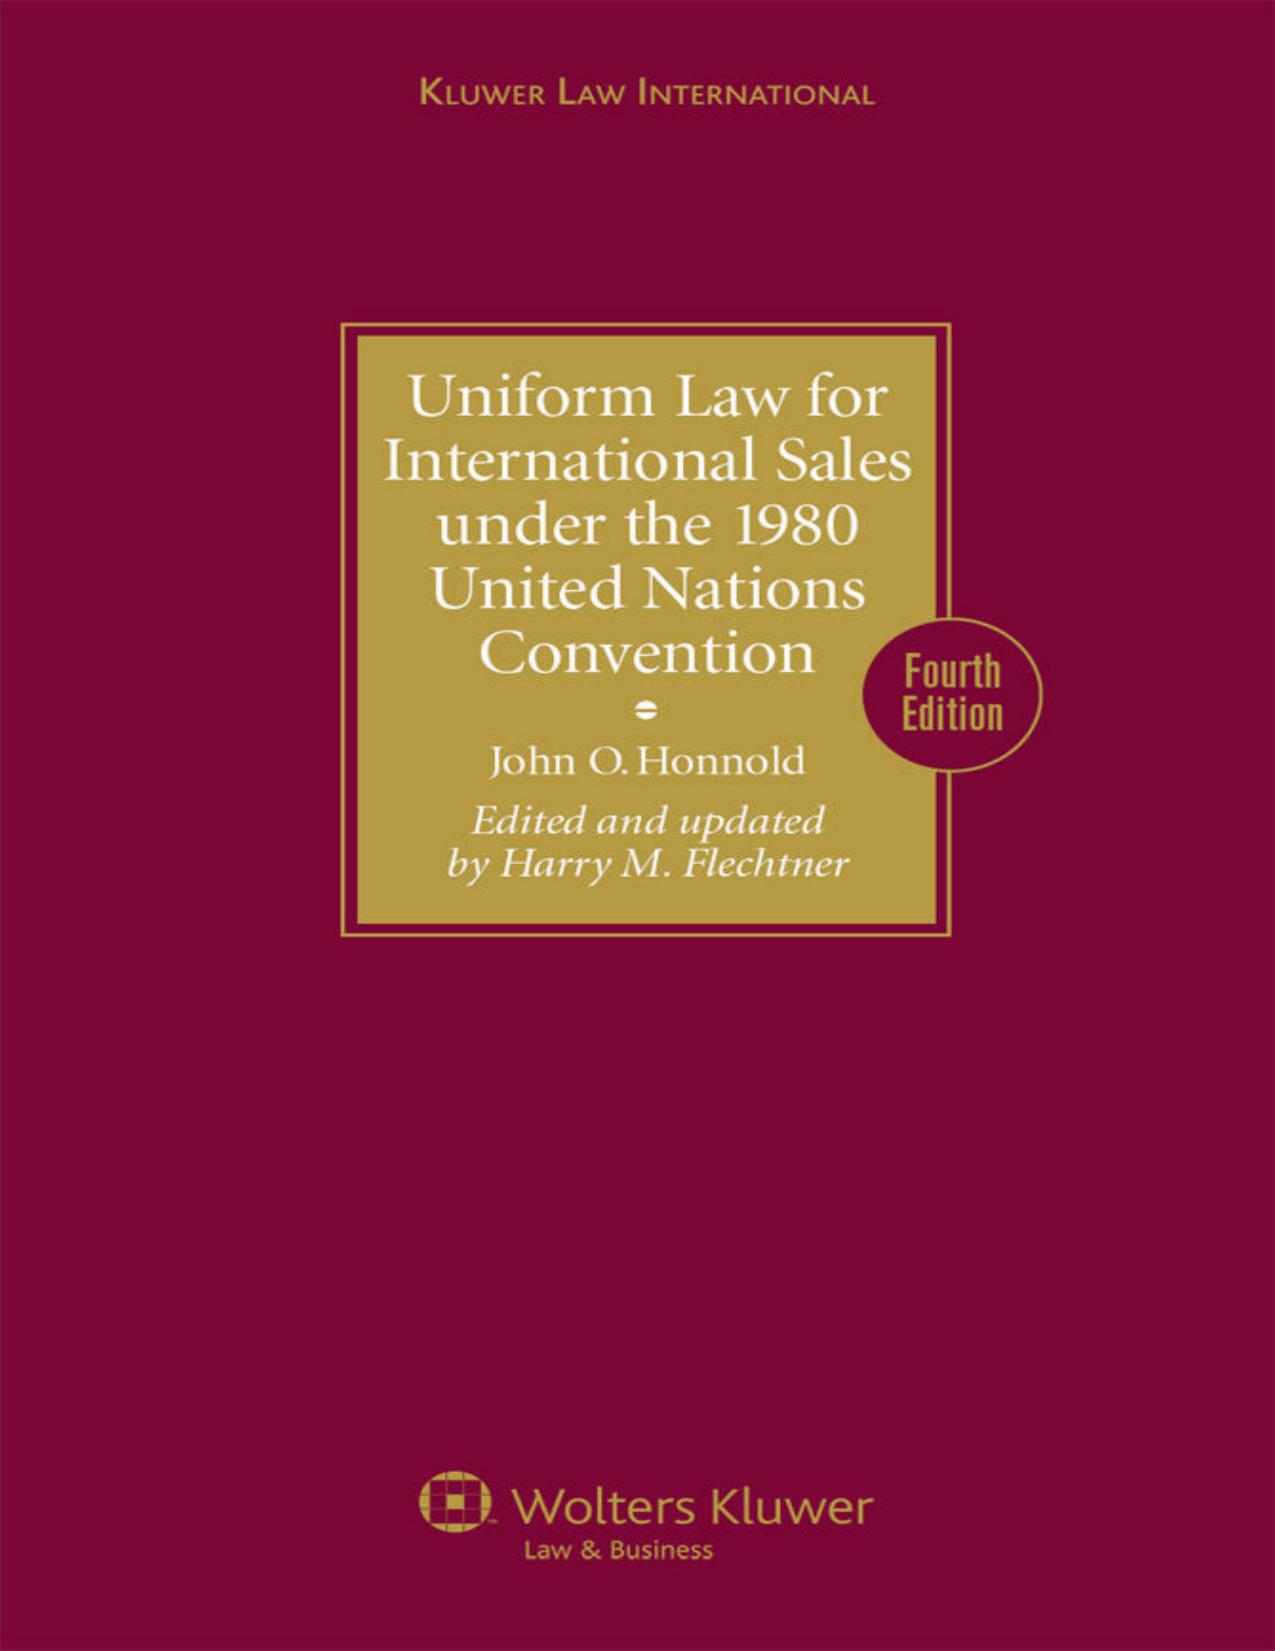 Uniform Law for International Sales under the 1980 United Nations Convention - John O. Honnold - John O. Honnold.jpg